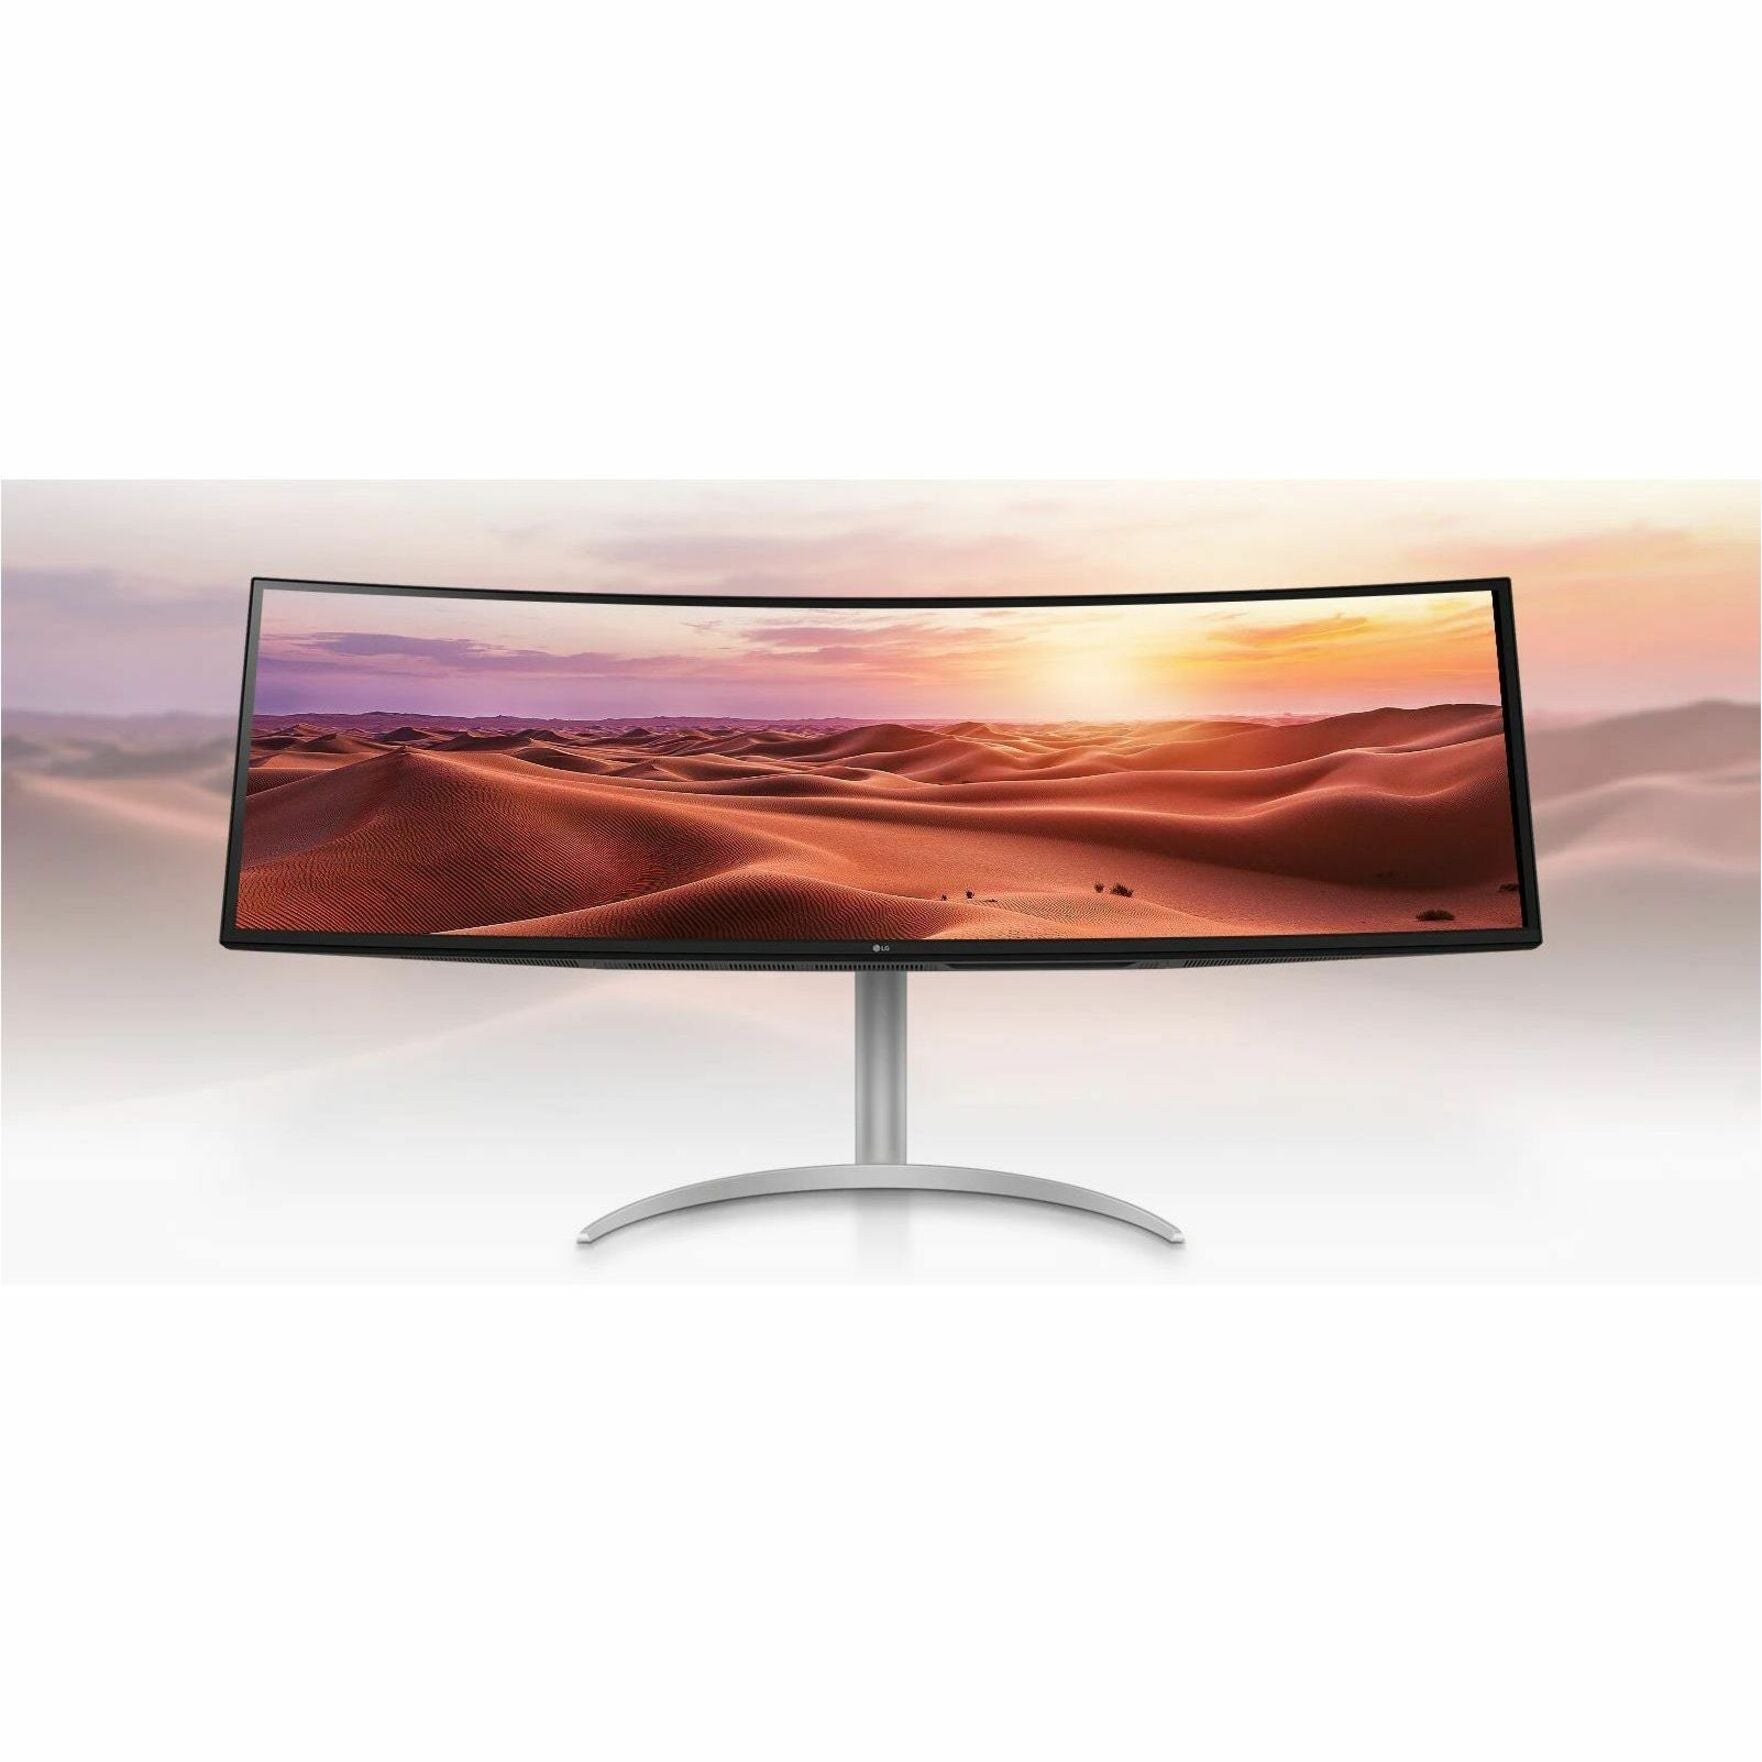 LG UltraWide 49WQ95C-W Gaming LCD Monitor, 49" UW-QHD Curved Screen, 32:9, 144Hz, FreeSync Premium Pro/G-sync Compatible